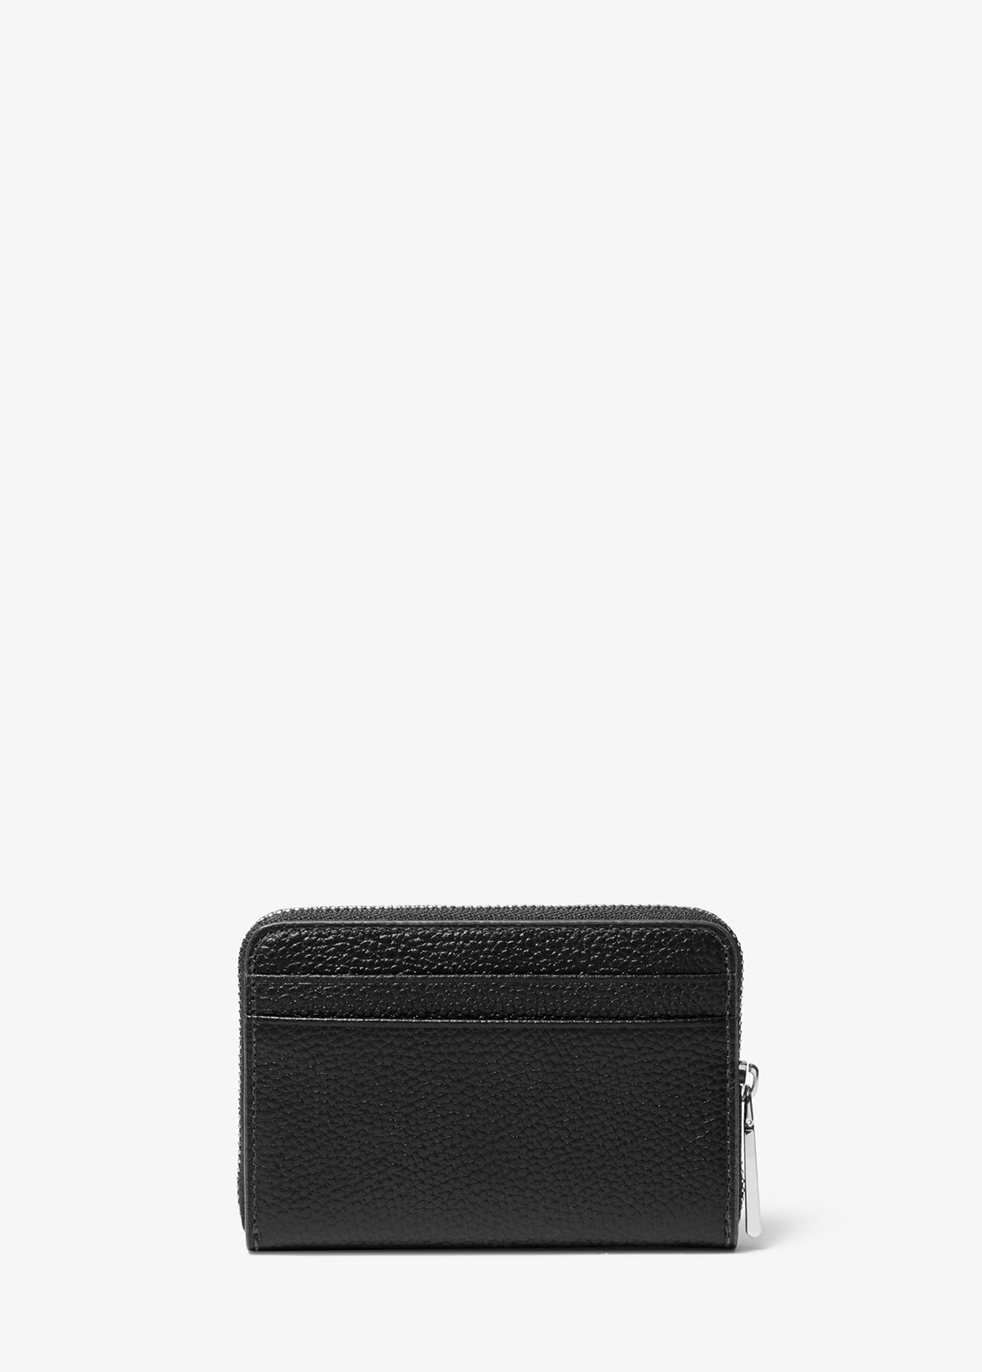 small black michael kors wallet